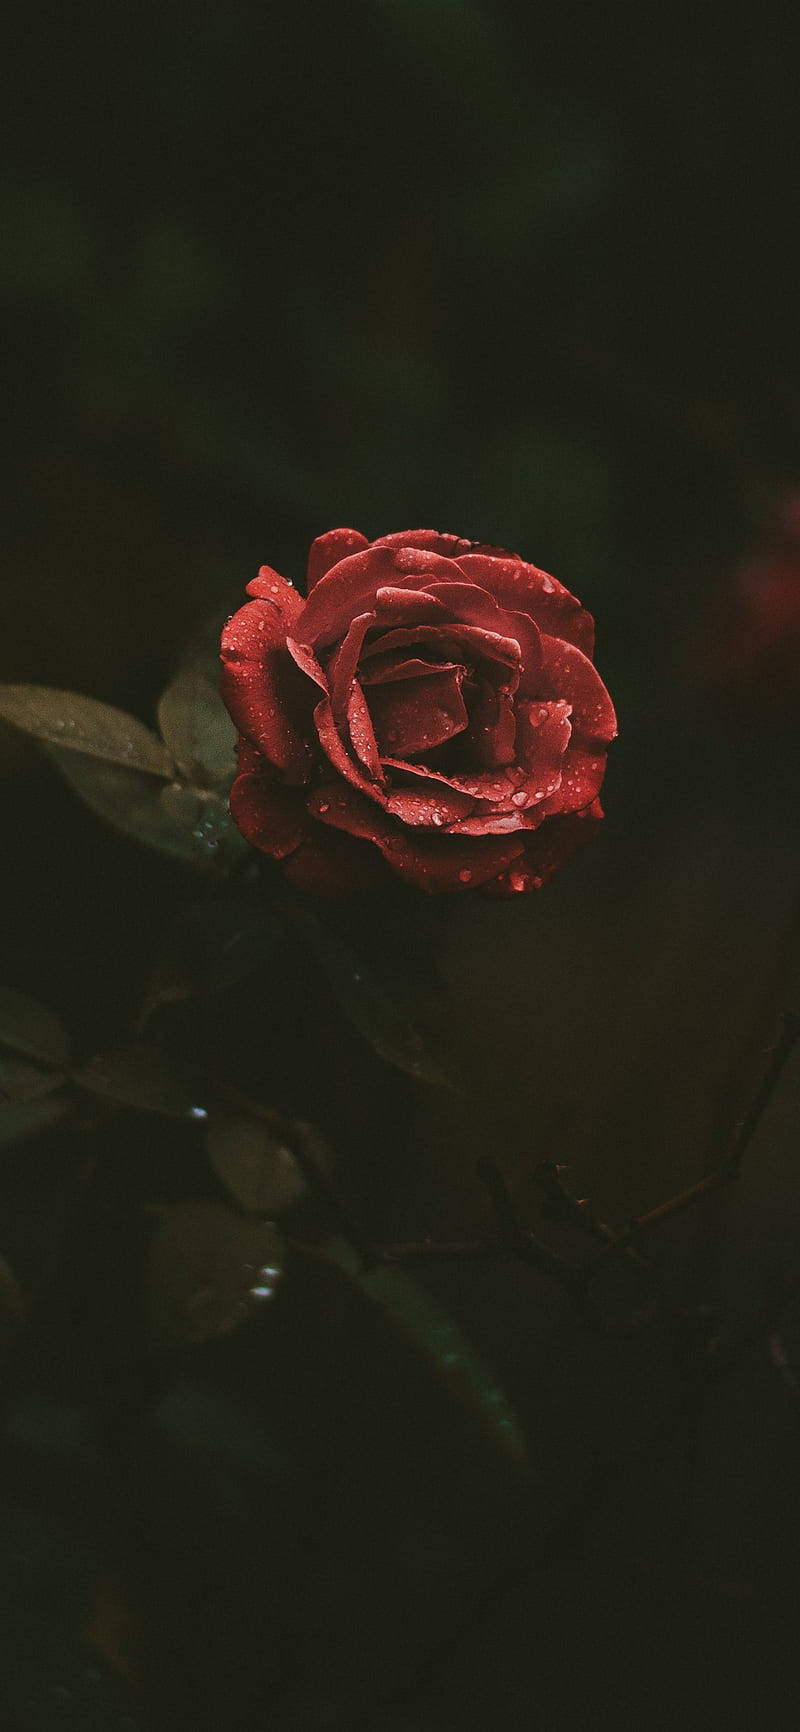 Blooming Red Rose on Original iPhone 4 Wallpaper